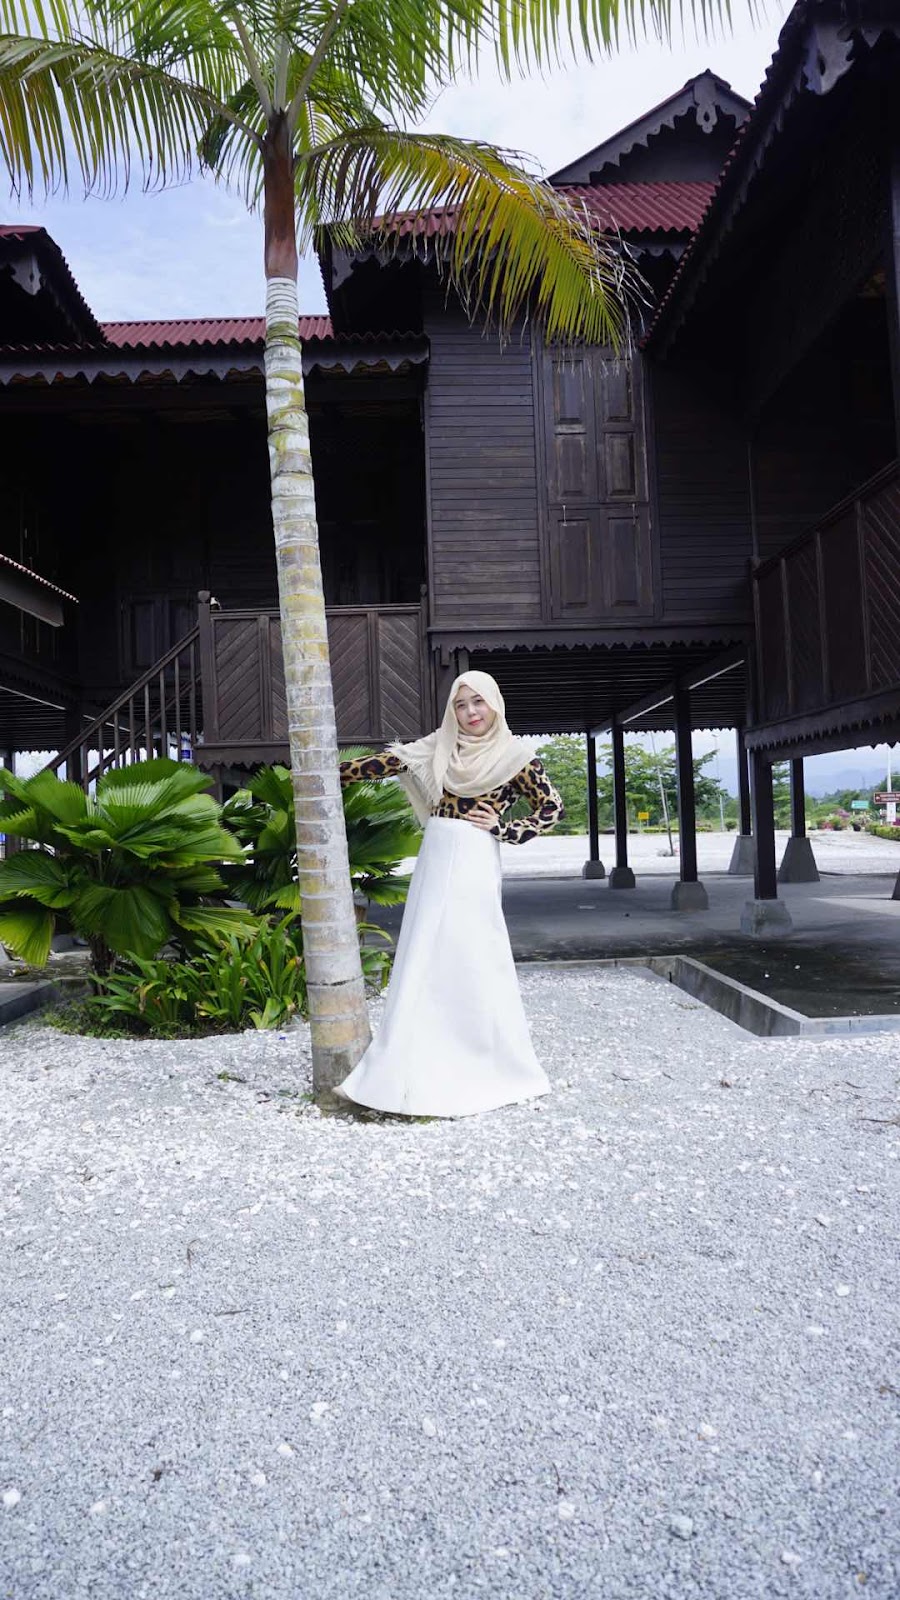 labu sayong Meru Manjaya Perak - tempat makan best di Ipoh - Premium Beautiful Therapants Perak